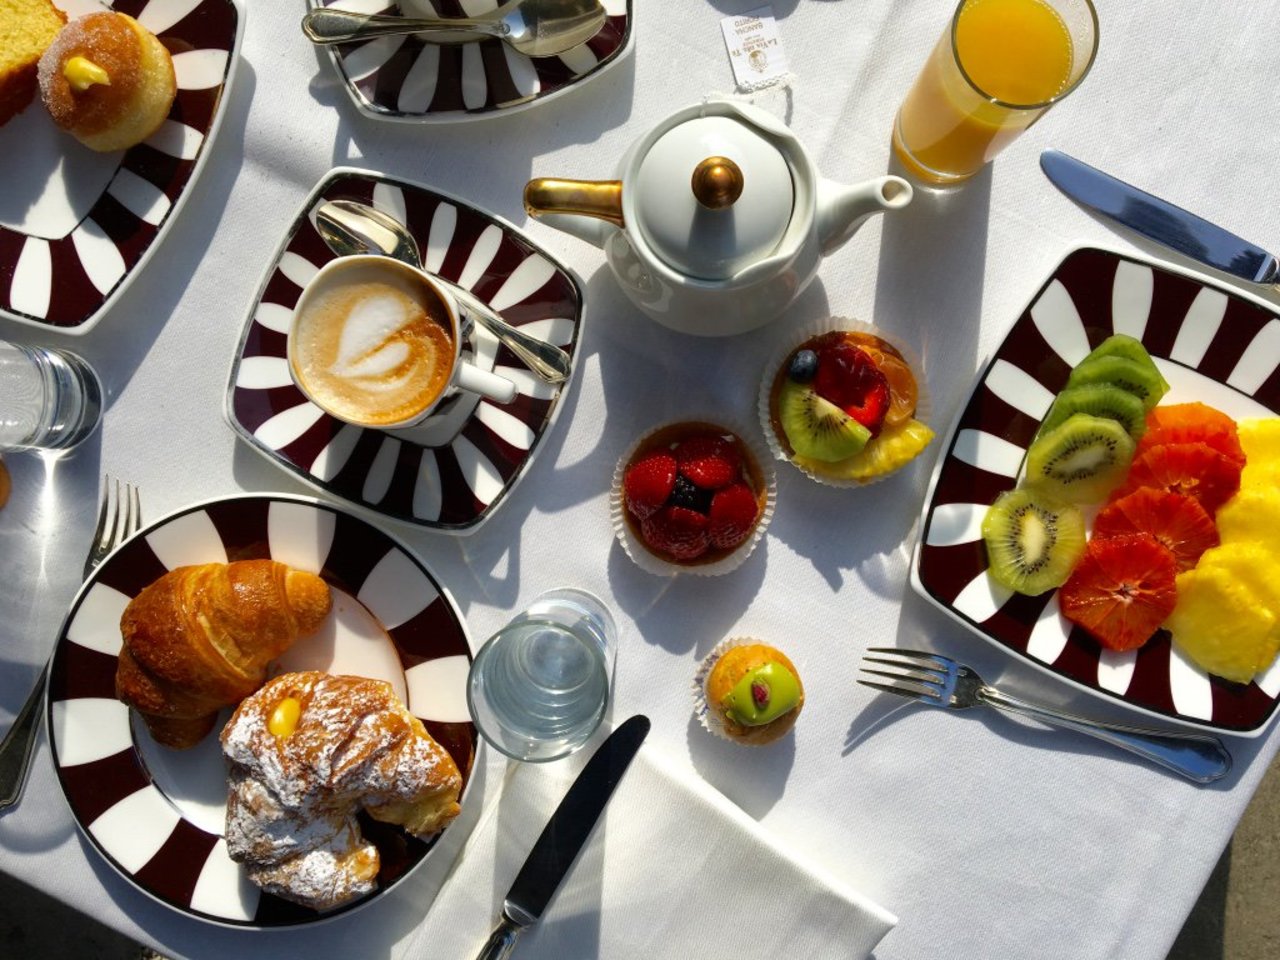 Breakfast in Florence @HotelRegency #luxurytravel #lifestyle #tuscany https://t.co/Eb0hVZsQnE